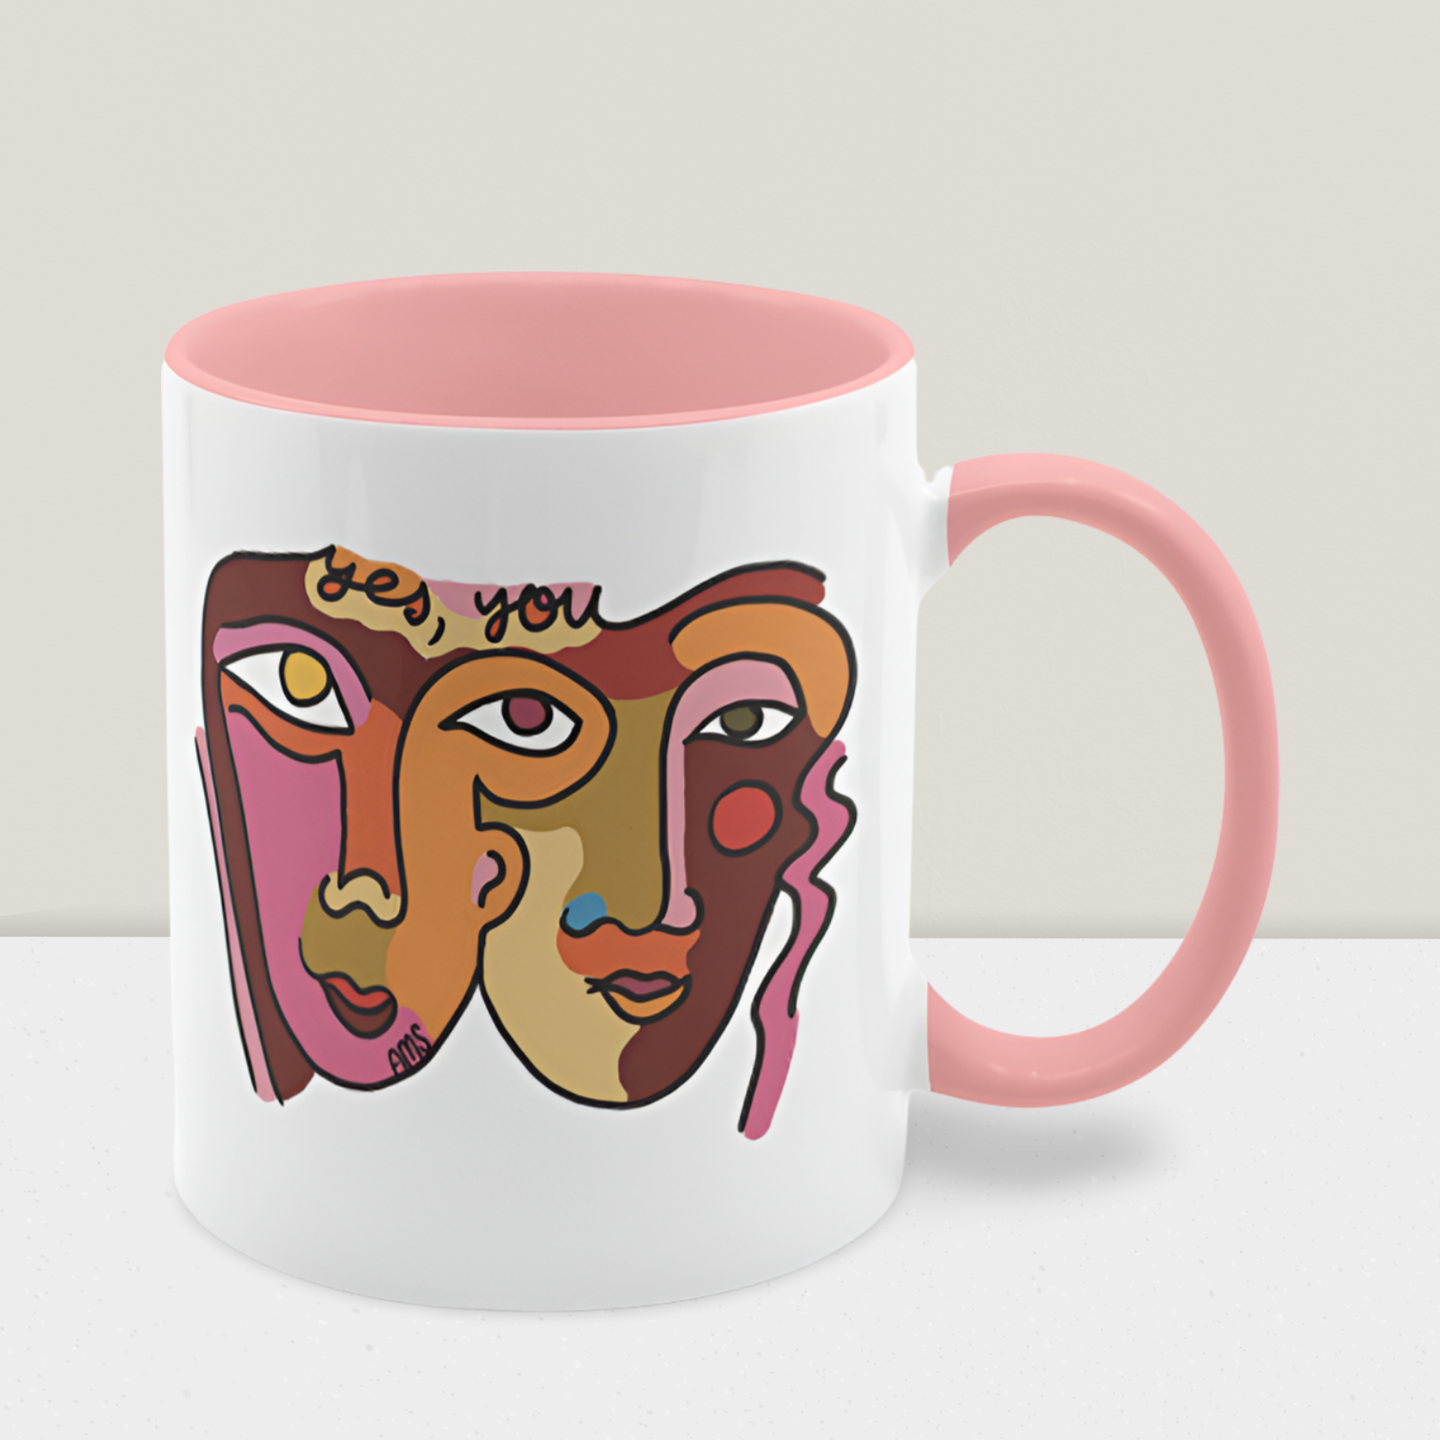 Coffee Mug "Yes, You"